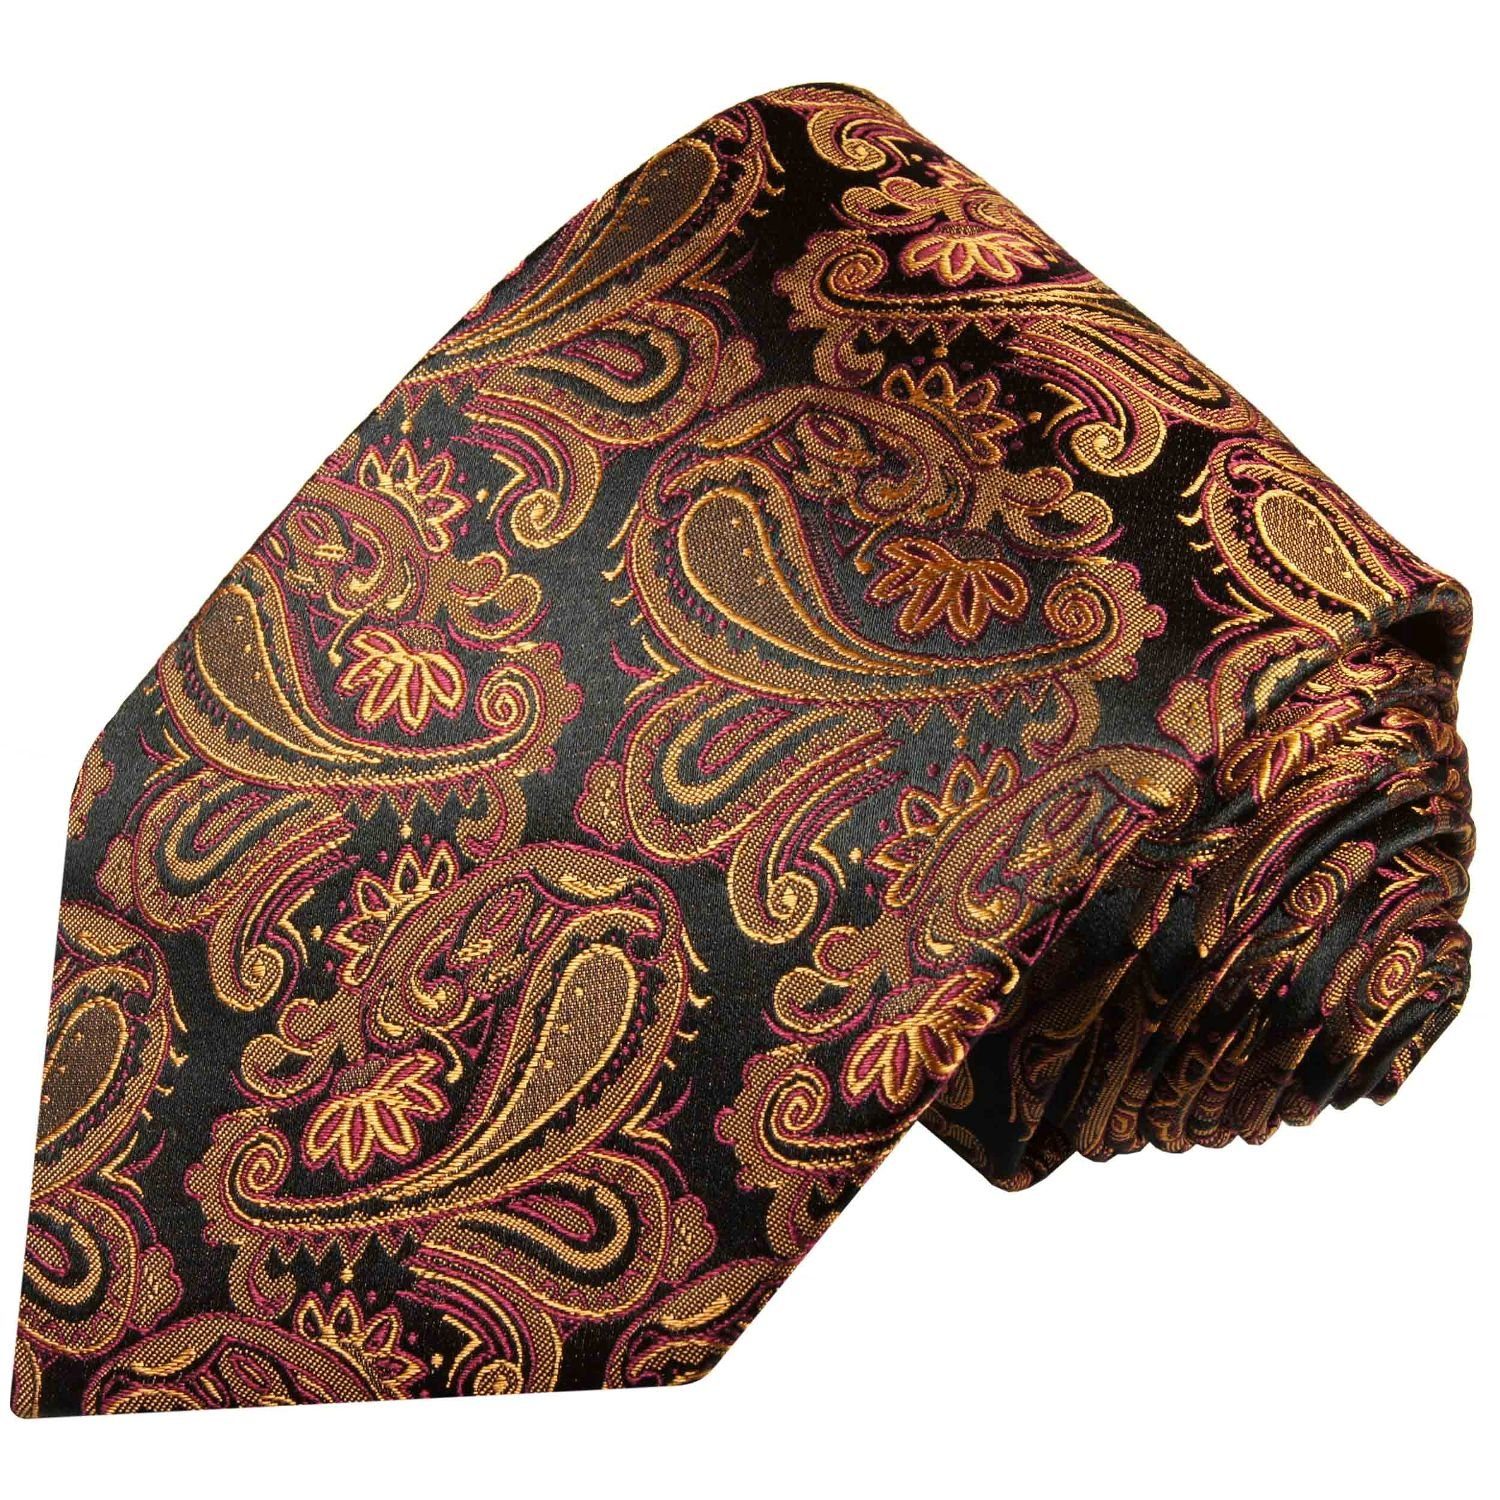 Paul Malone Krawatte Elegante Seidenkrawatte Herren Schlips paisley brokat 100% Seide Breit (8cm), schwarz rot braun 630